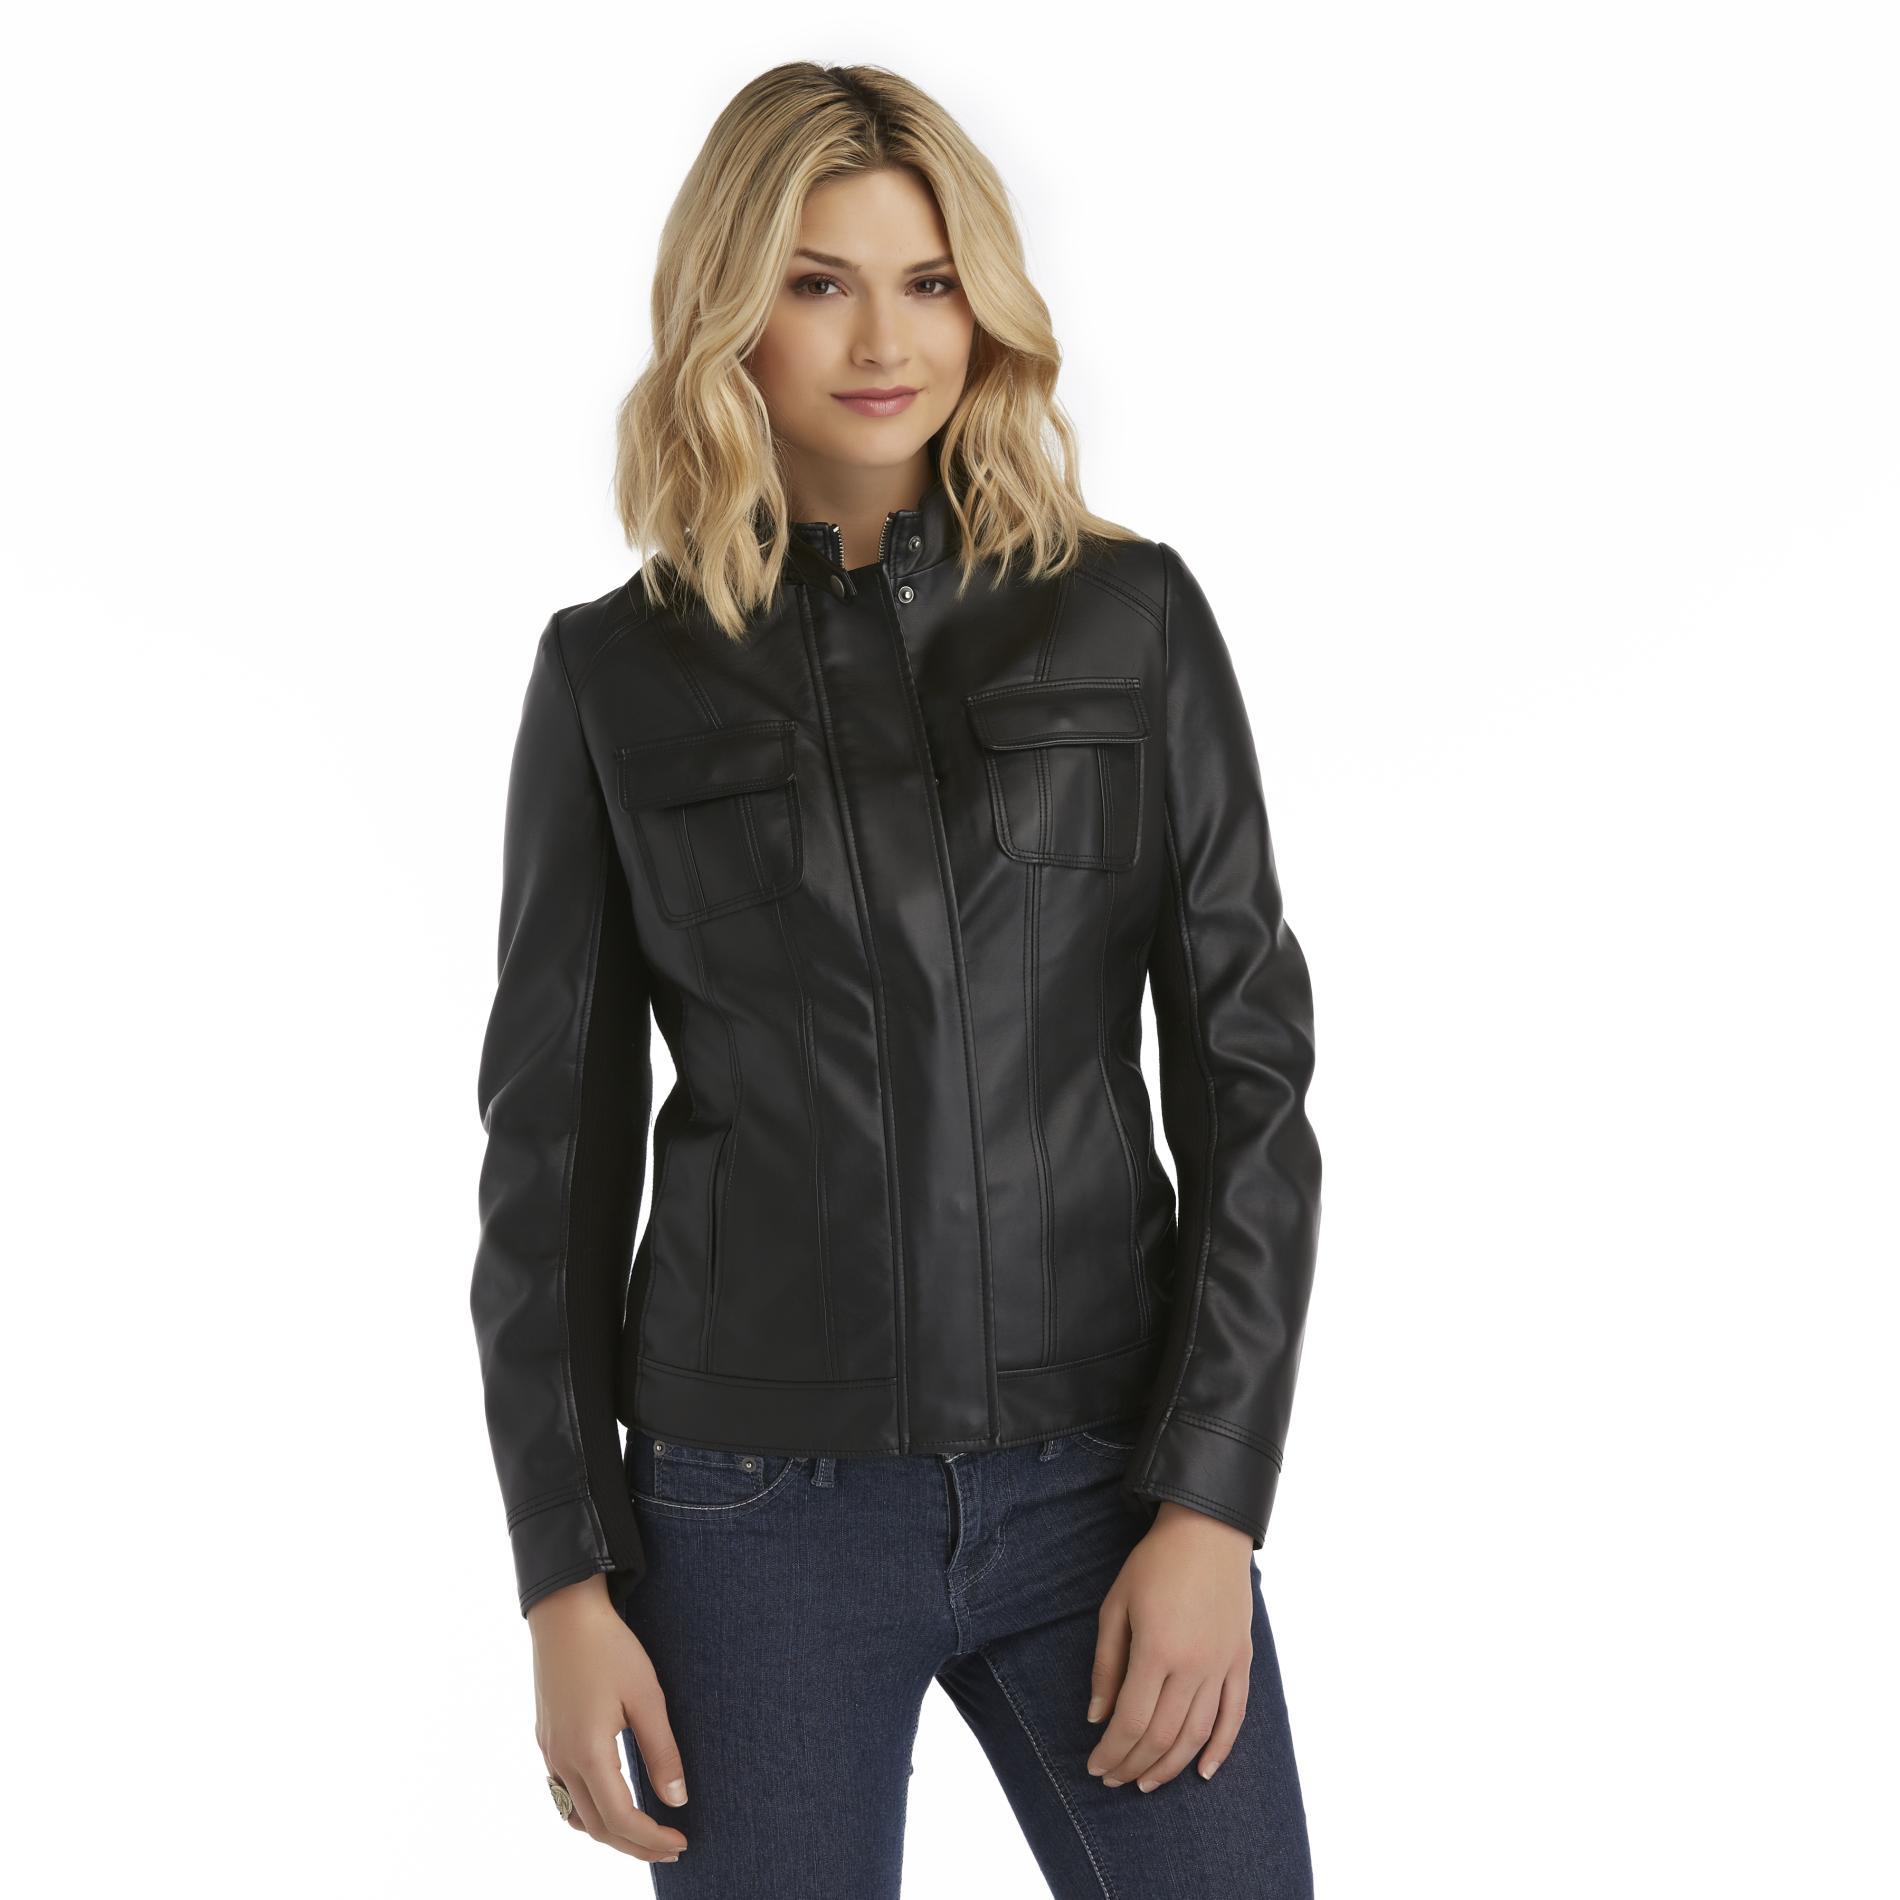 Metaphor Women's Faux Leather Bomber Jacket